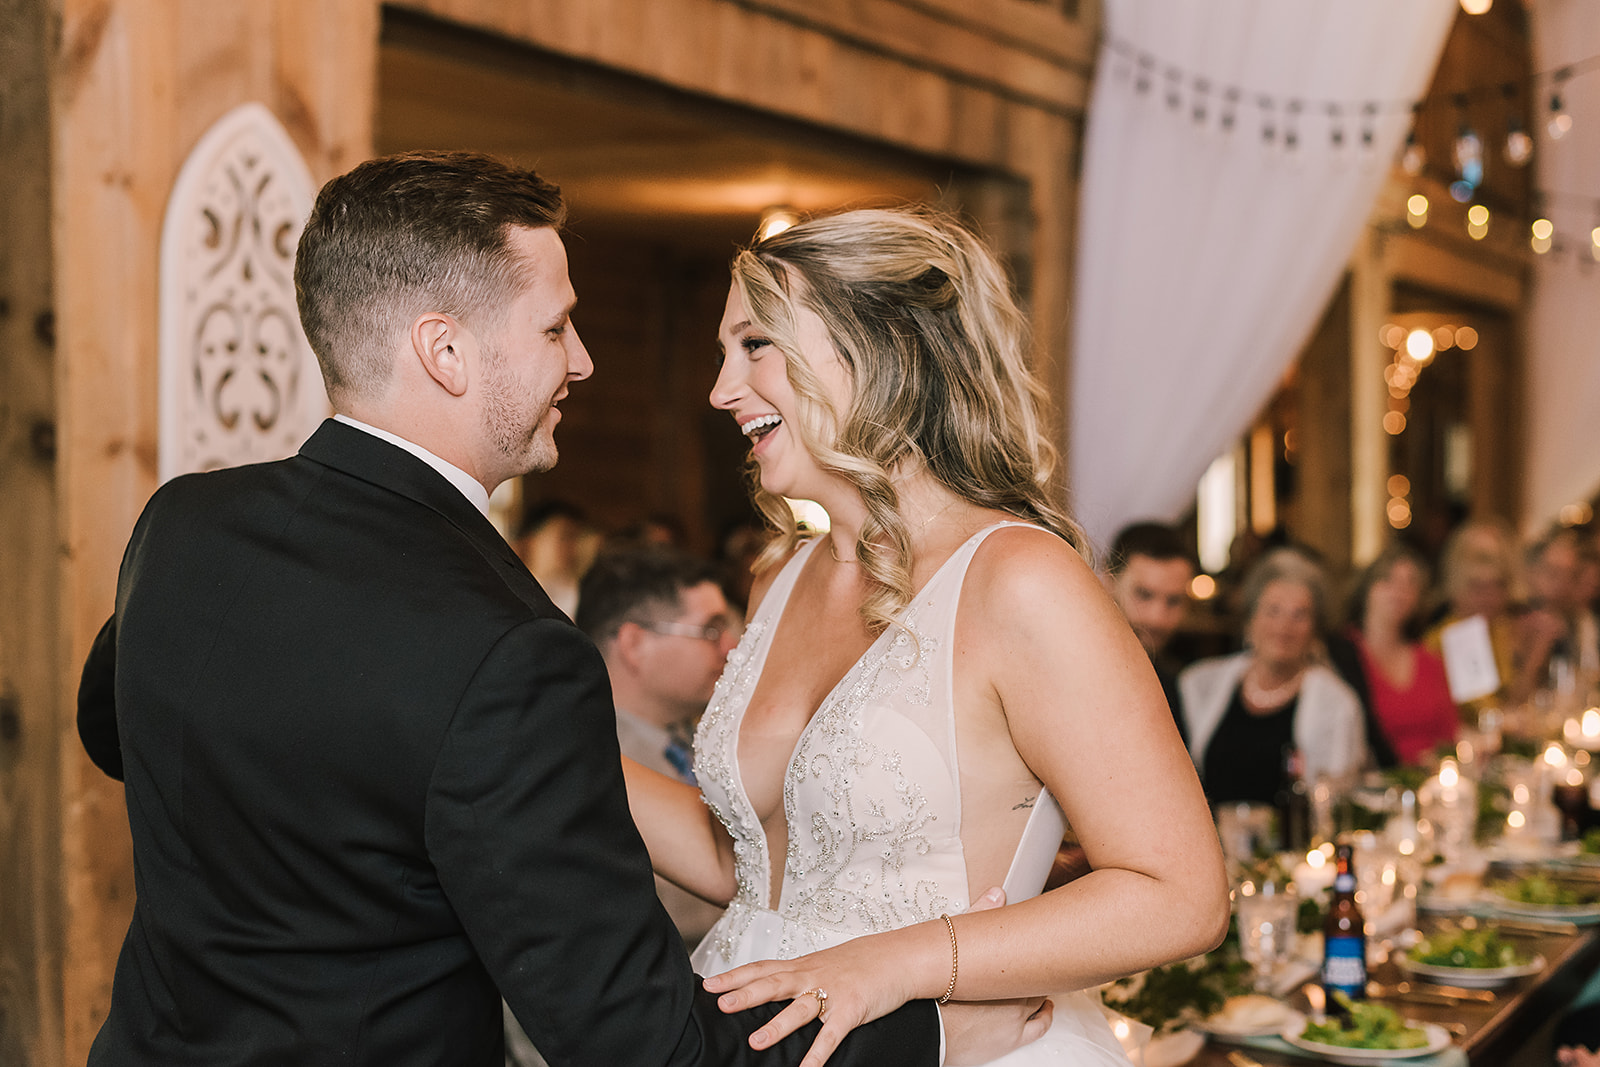 Riverwinds farm and estate Saco Maine Wedding reception details barn bride groom first dance